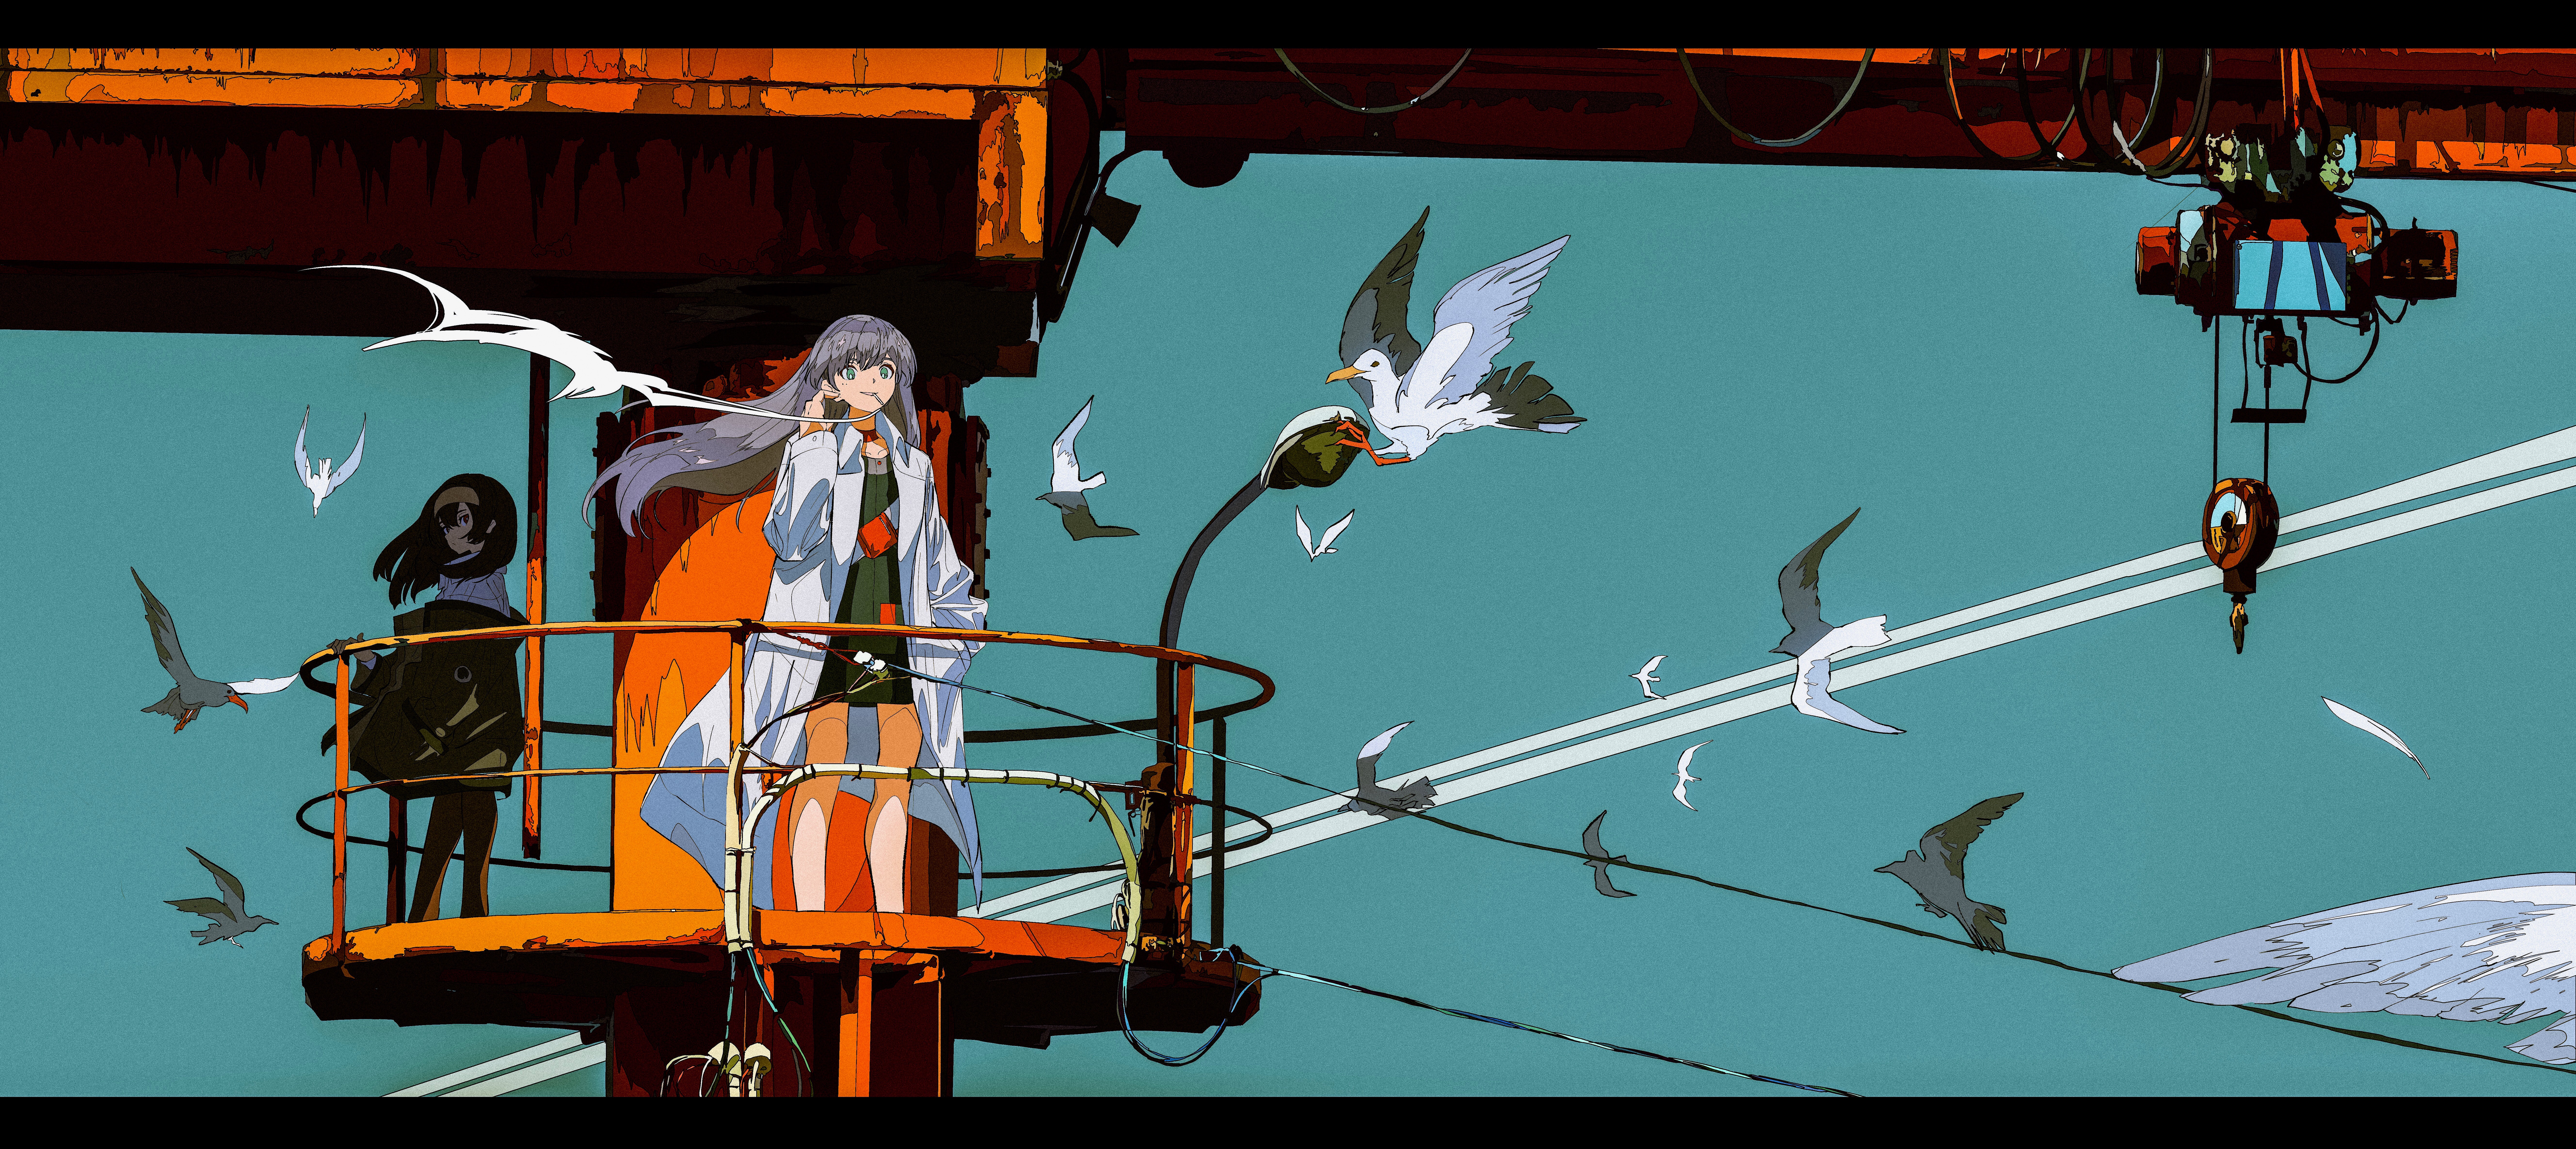 Anime 10625x4740 seagulls smoking anime girls Cogecha artwork